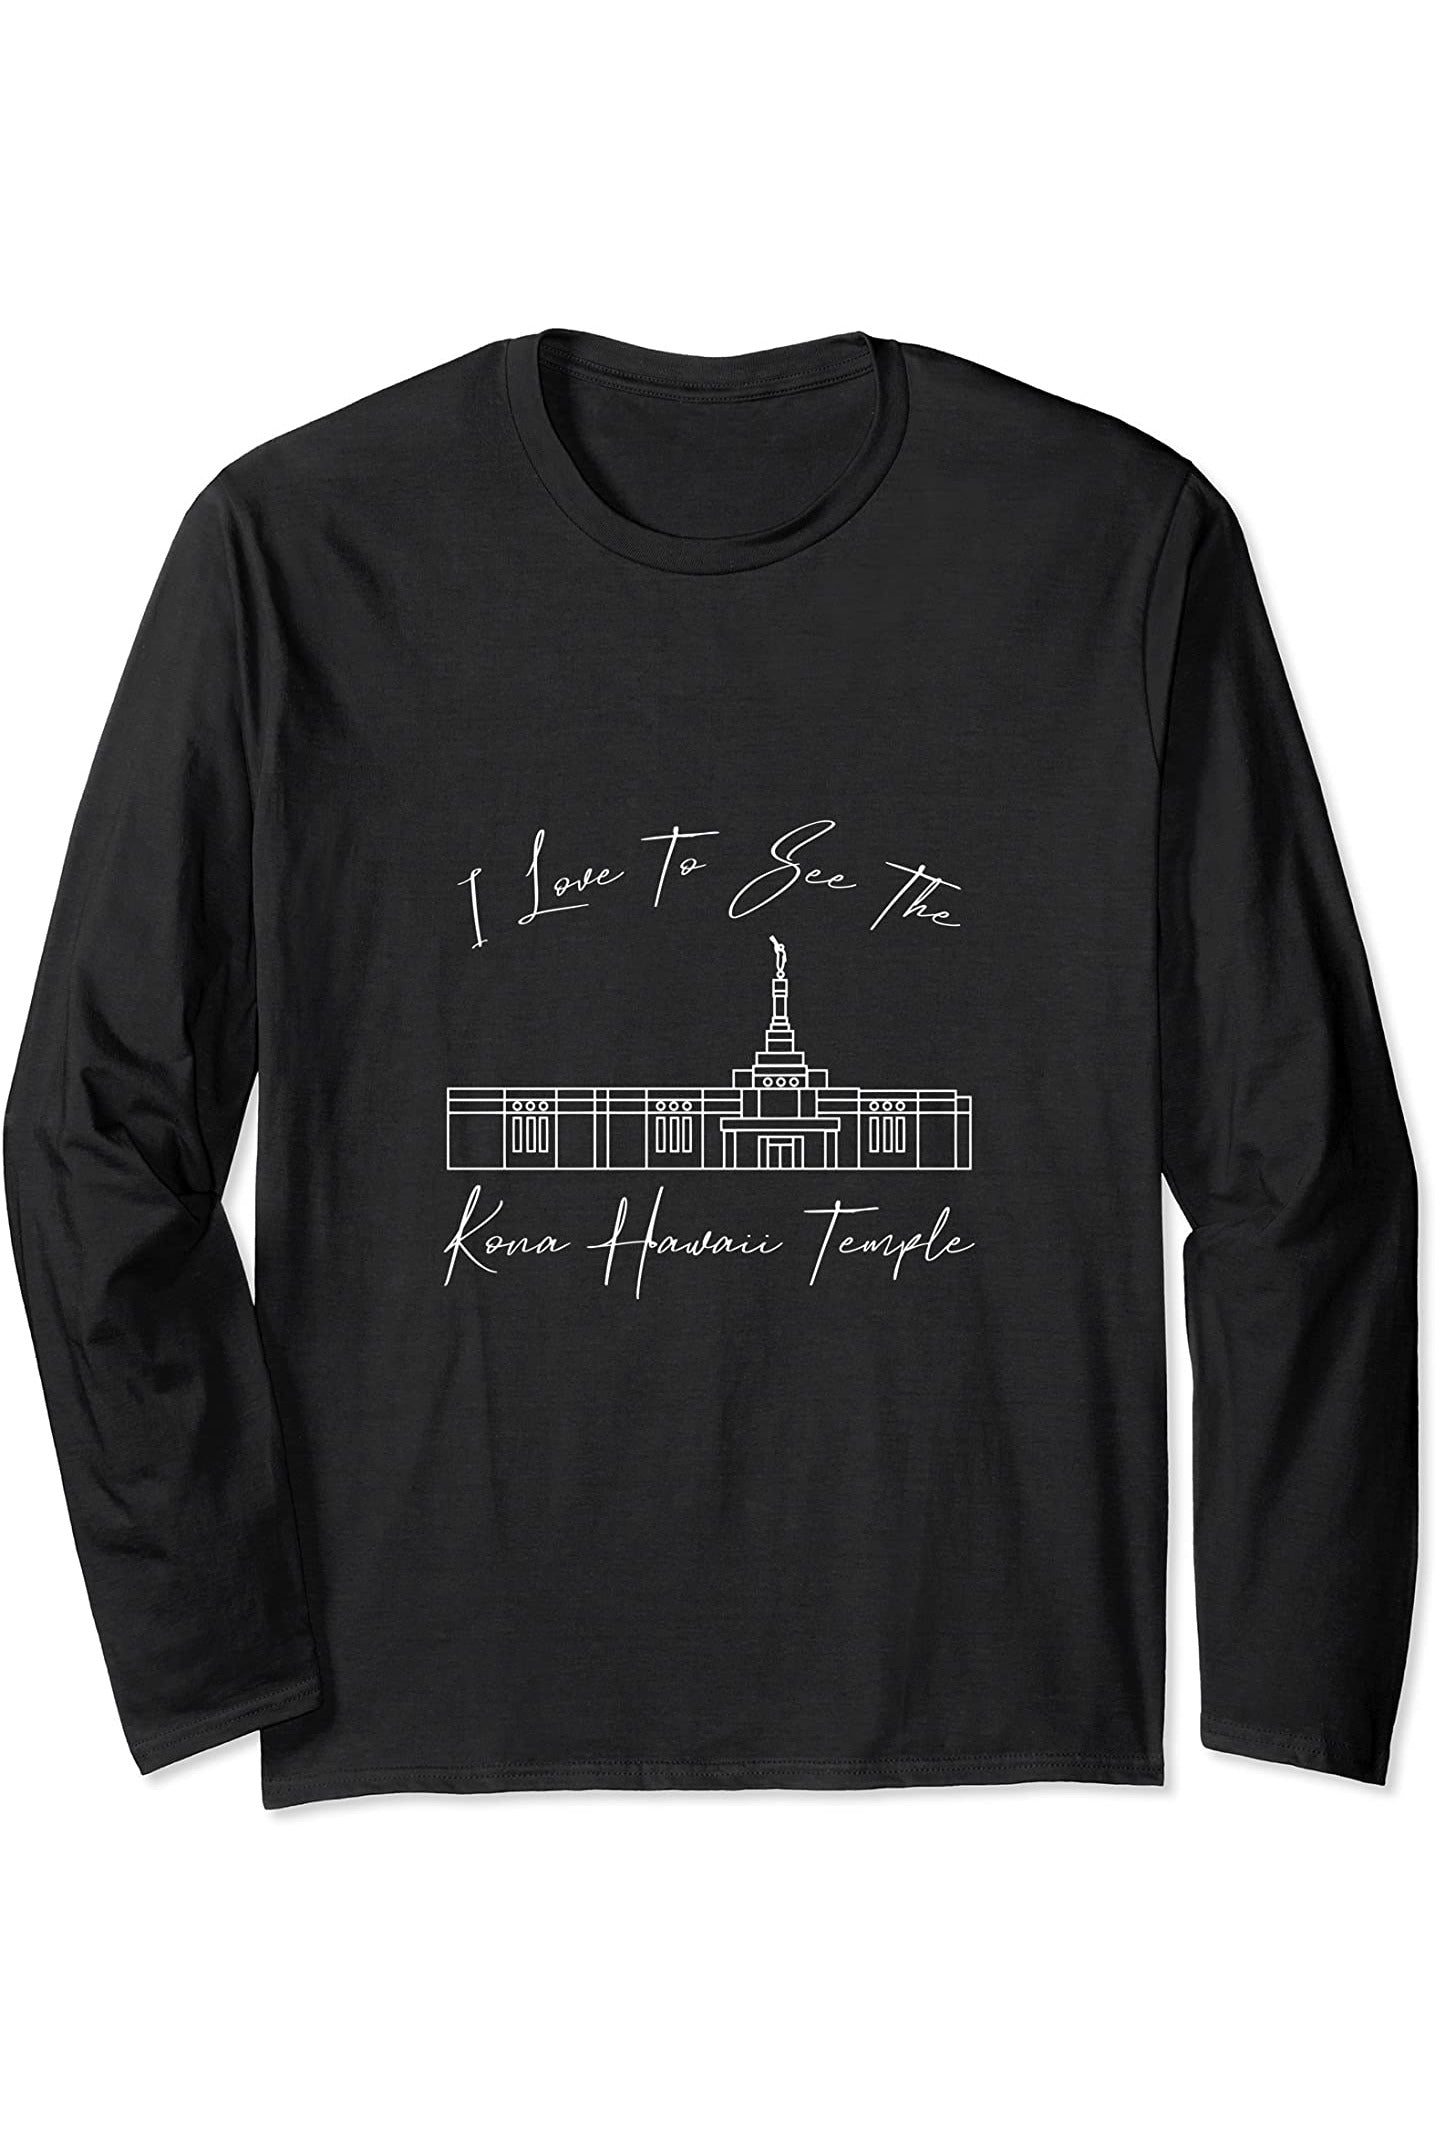 Kona Hawaii Temple Long Sleeve T-Shirt - Calligraphy Style (English) US